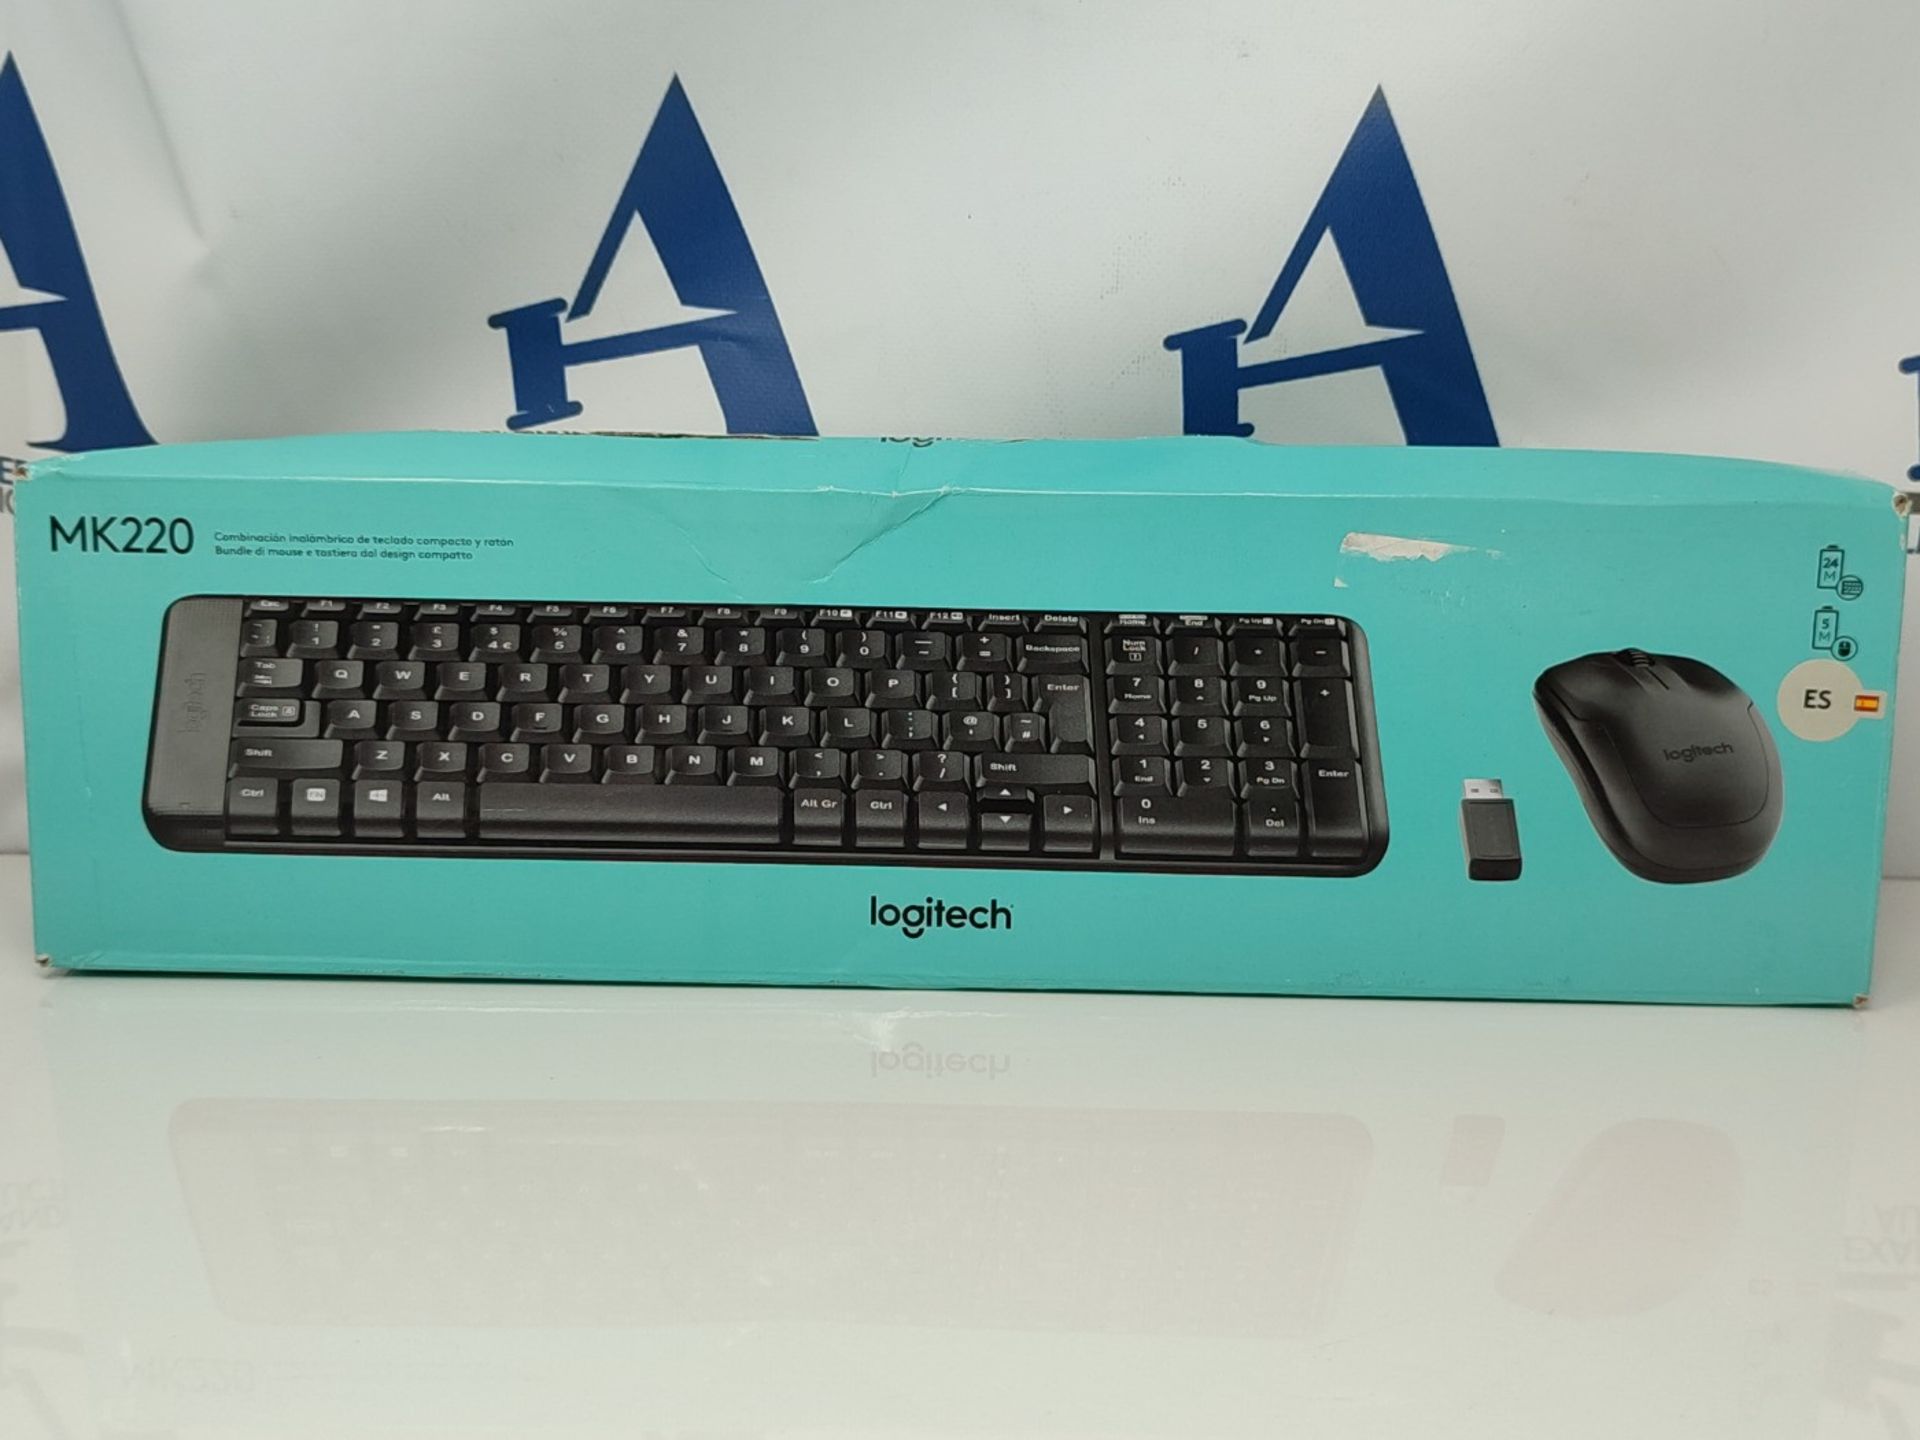 Logitech MK220 Compact Wireless Keyboard and Mouse Combo, QWERTY Spanish Layout - Blac - Image 2 of 3